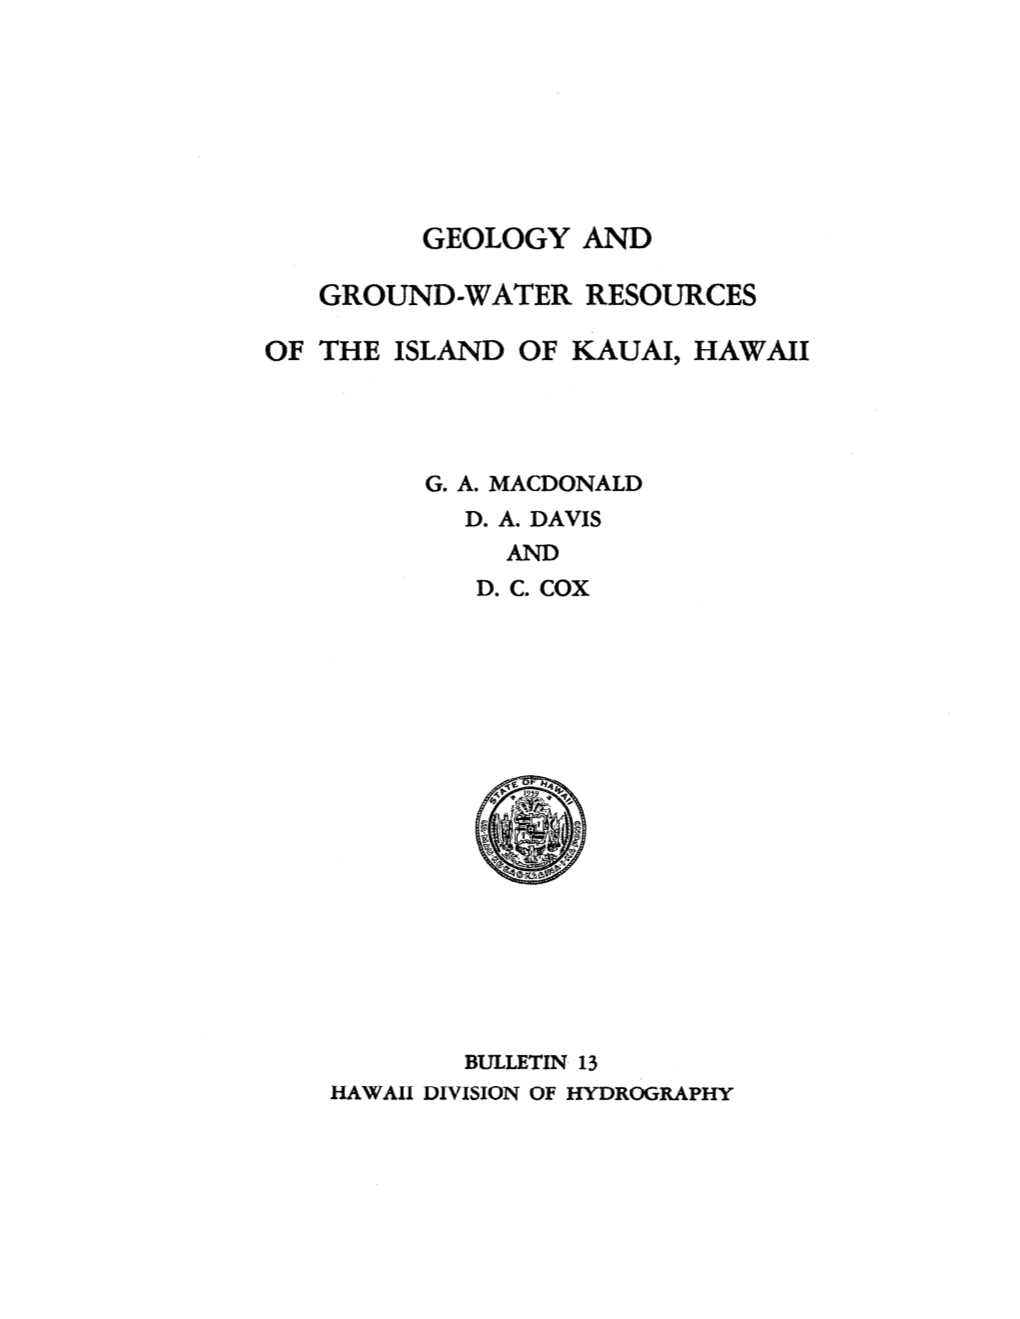 Geology and Ground-Water Resources of the Island of Kauai, Hawaii